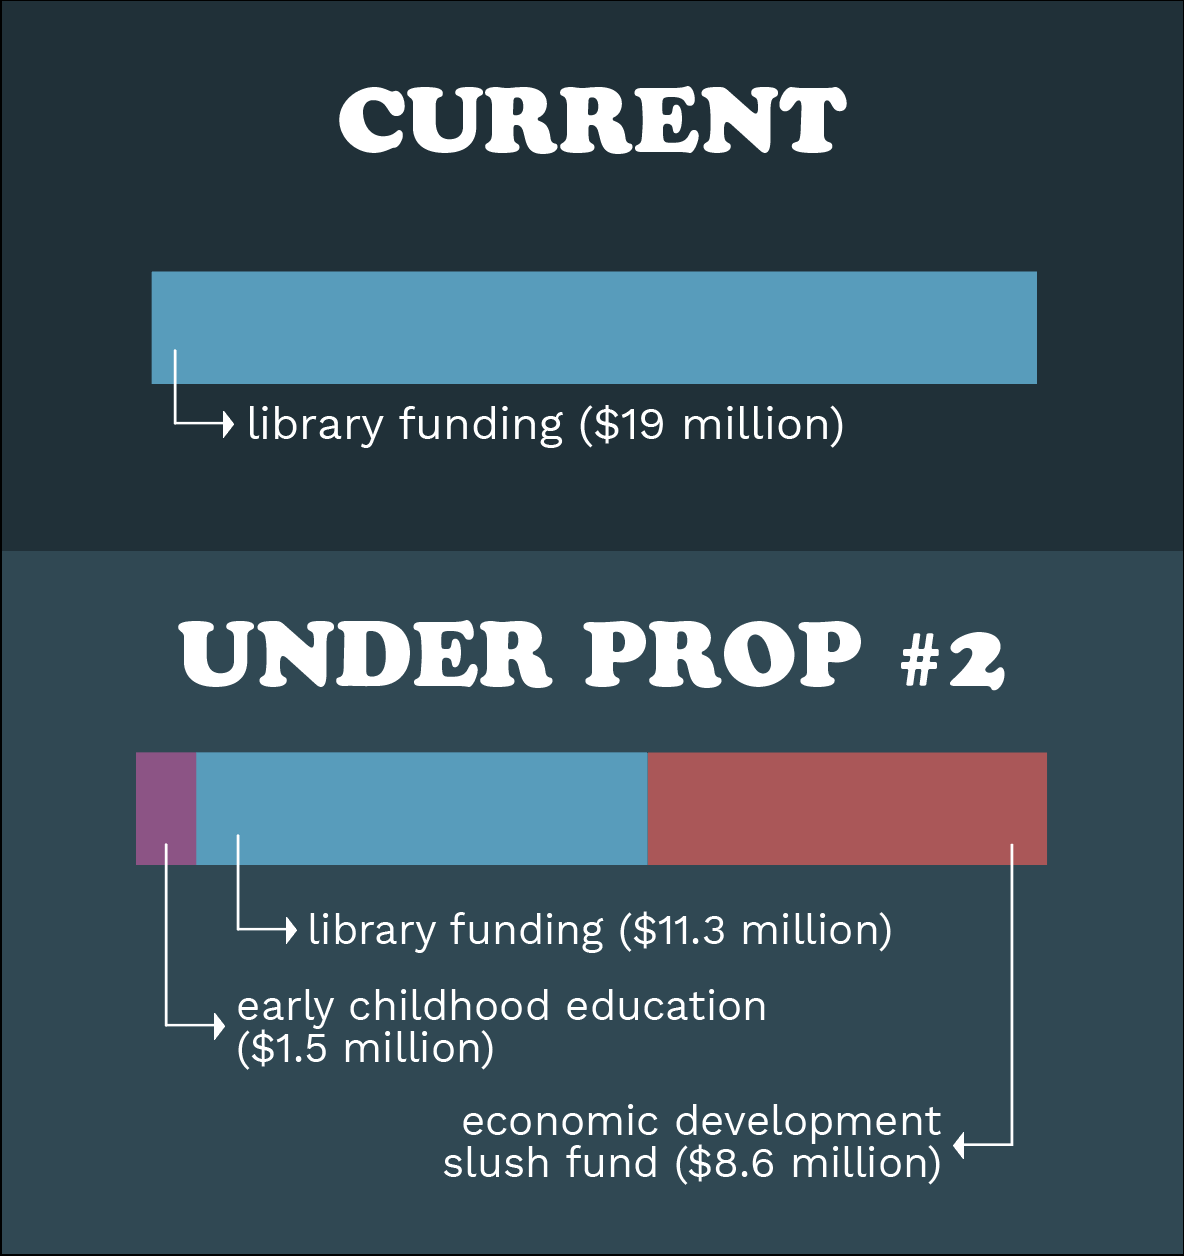 CURRENT
			Library Funding: $19 million. 

			UNDER PROP 2 
			Early Childhood Education: $1.5 million
			Library Funding: $11.3 million
			Economic Development Slush Fund: $8.6 million